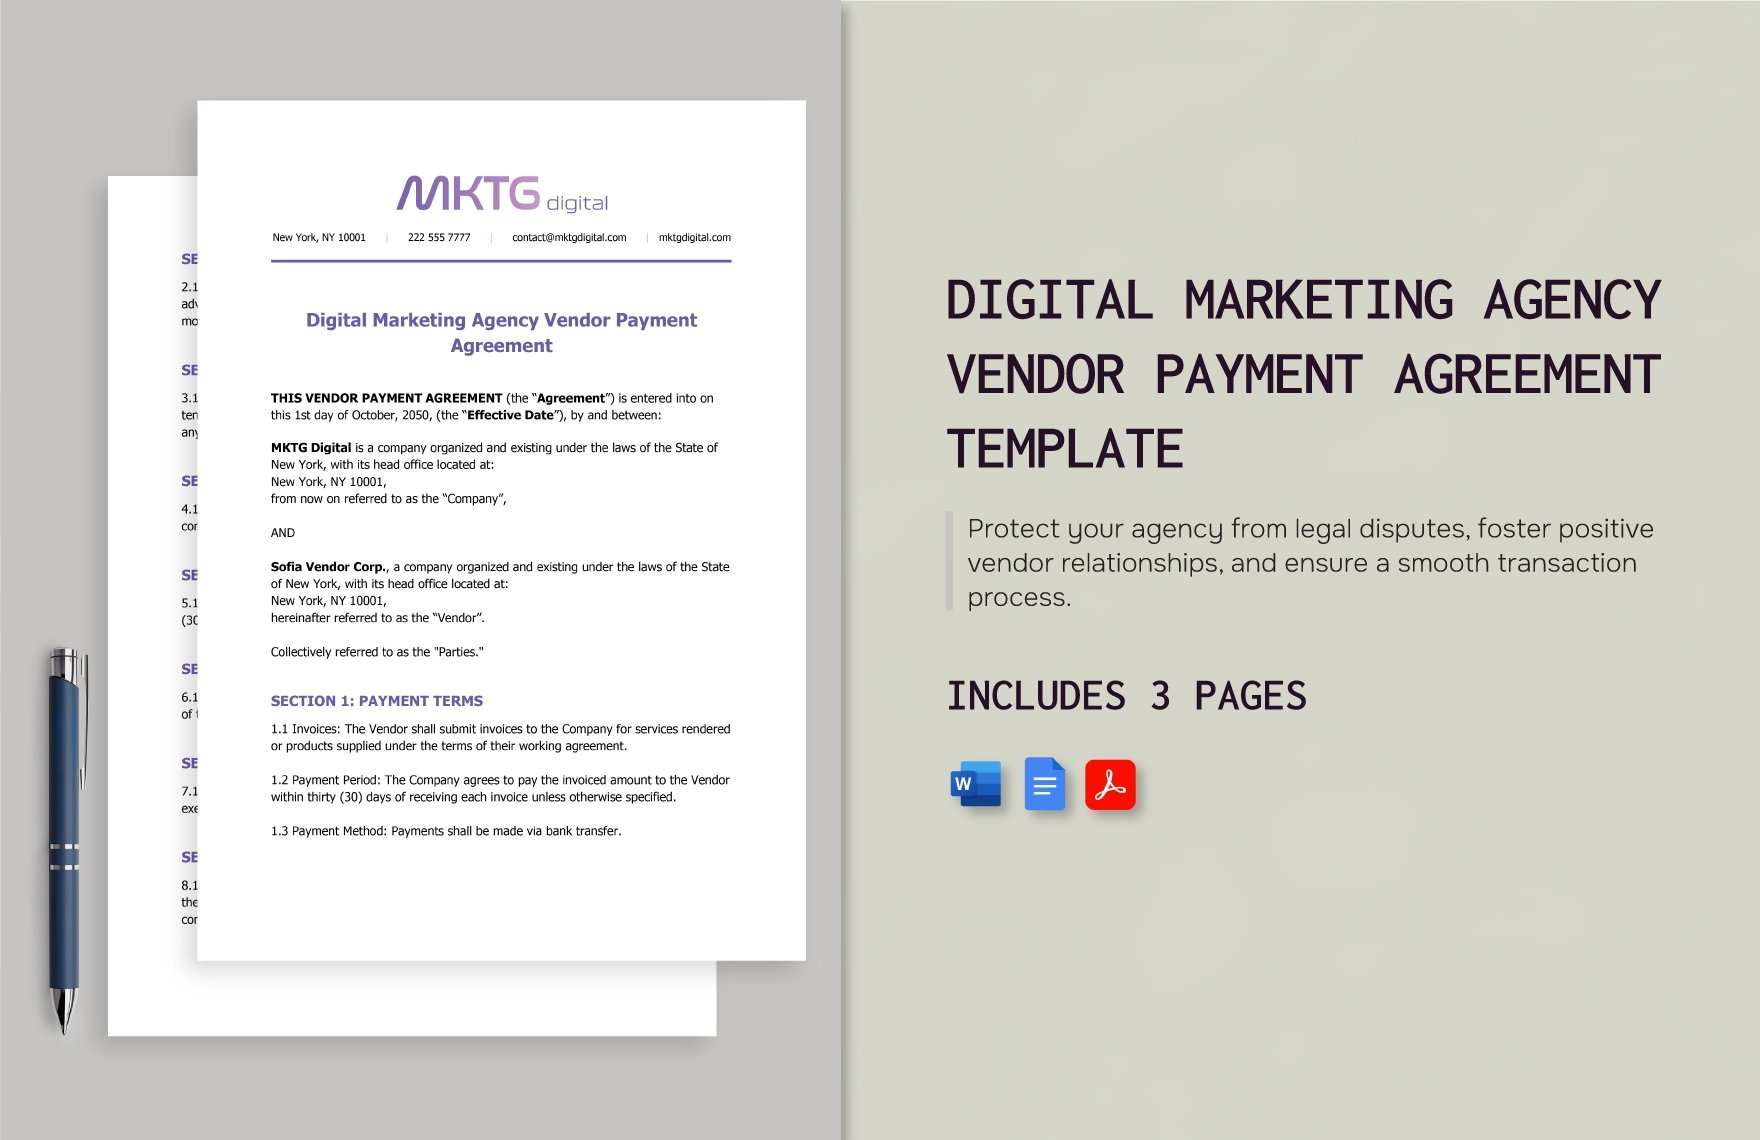 Digital Marketing Agency Vendor Payment Agreement Template